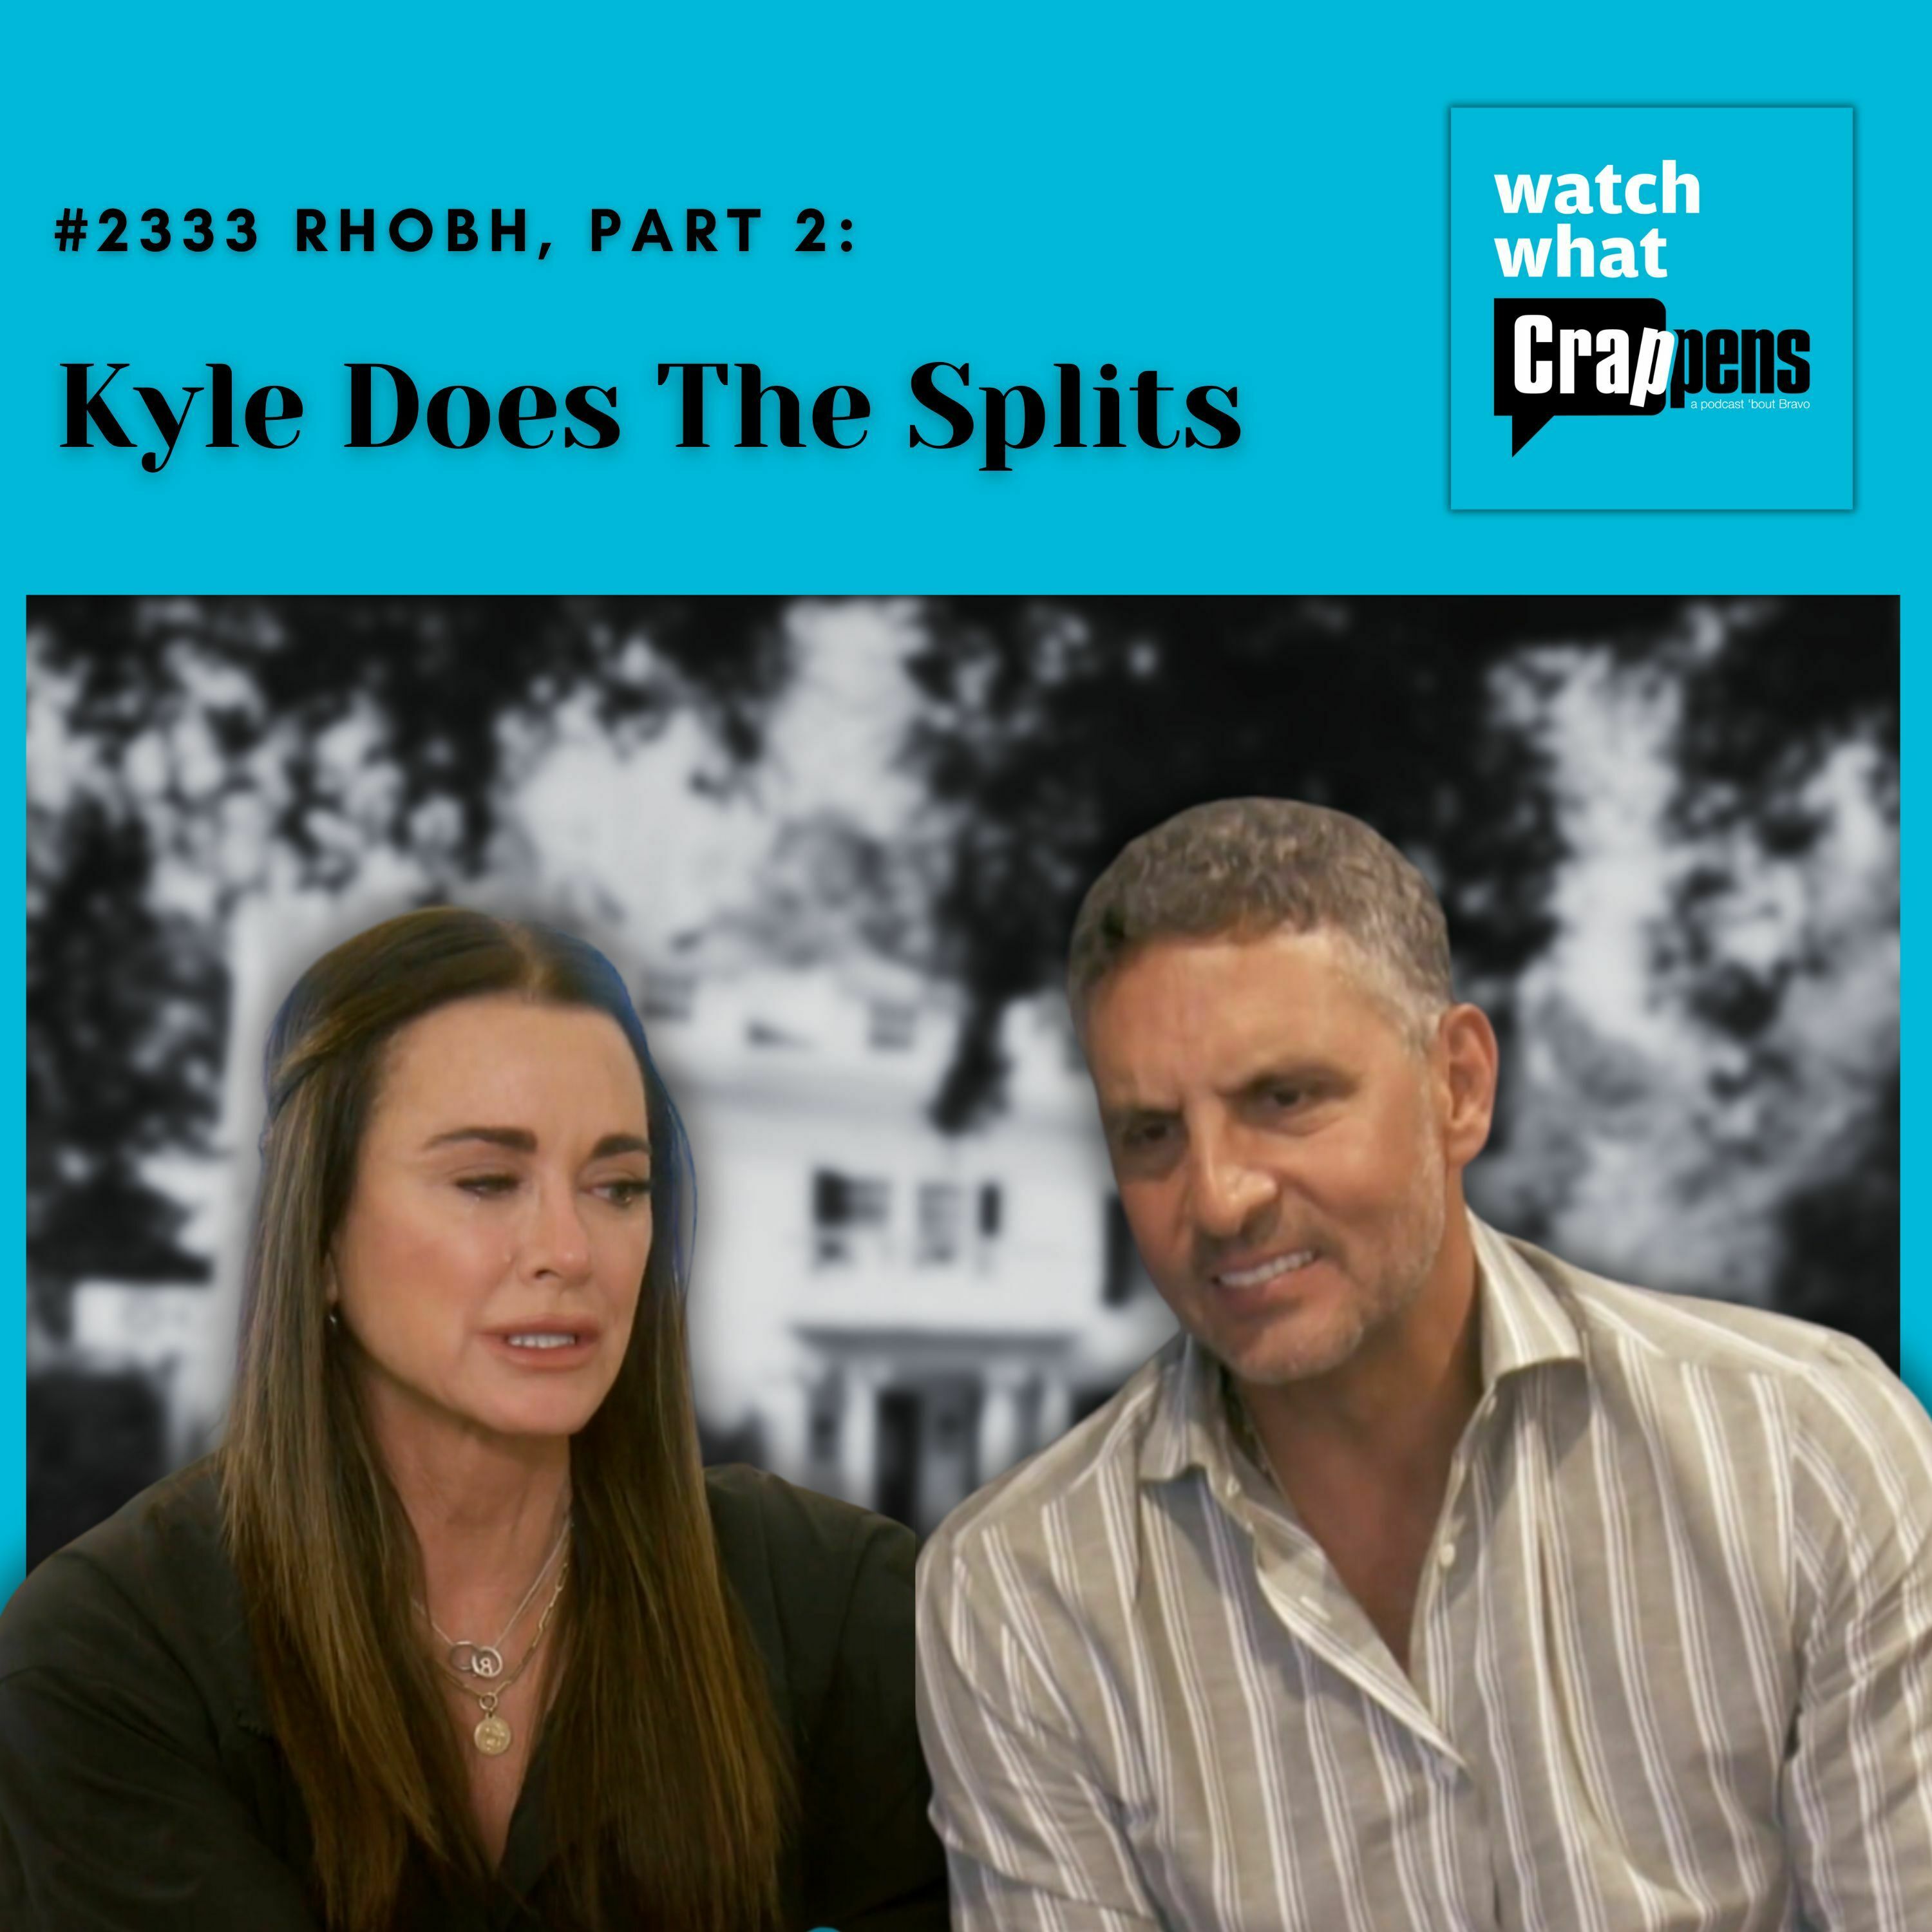 #2333 RHOBH, Part 2: Kyle Does The Splits